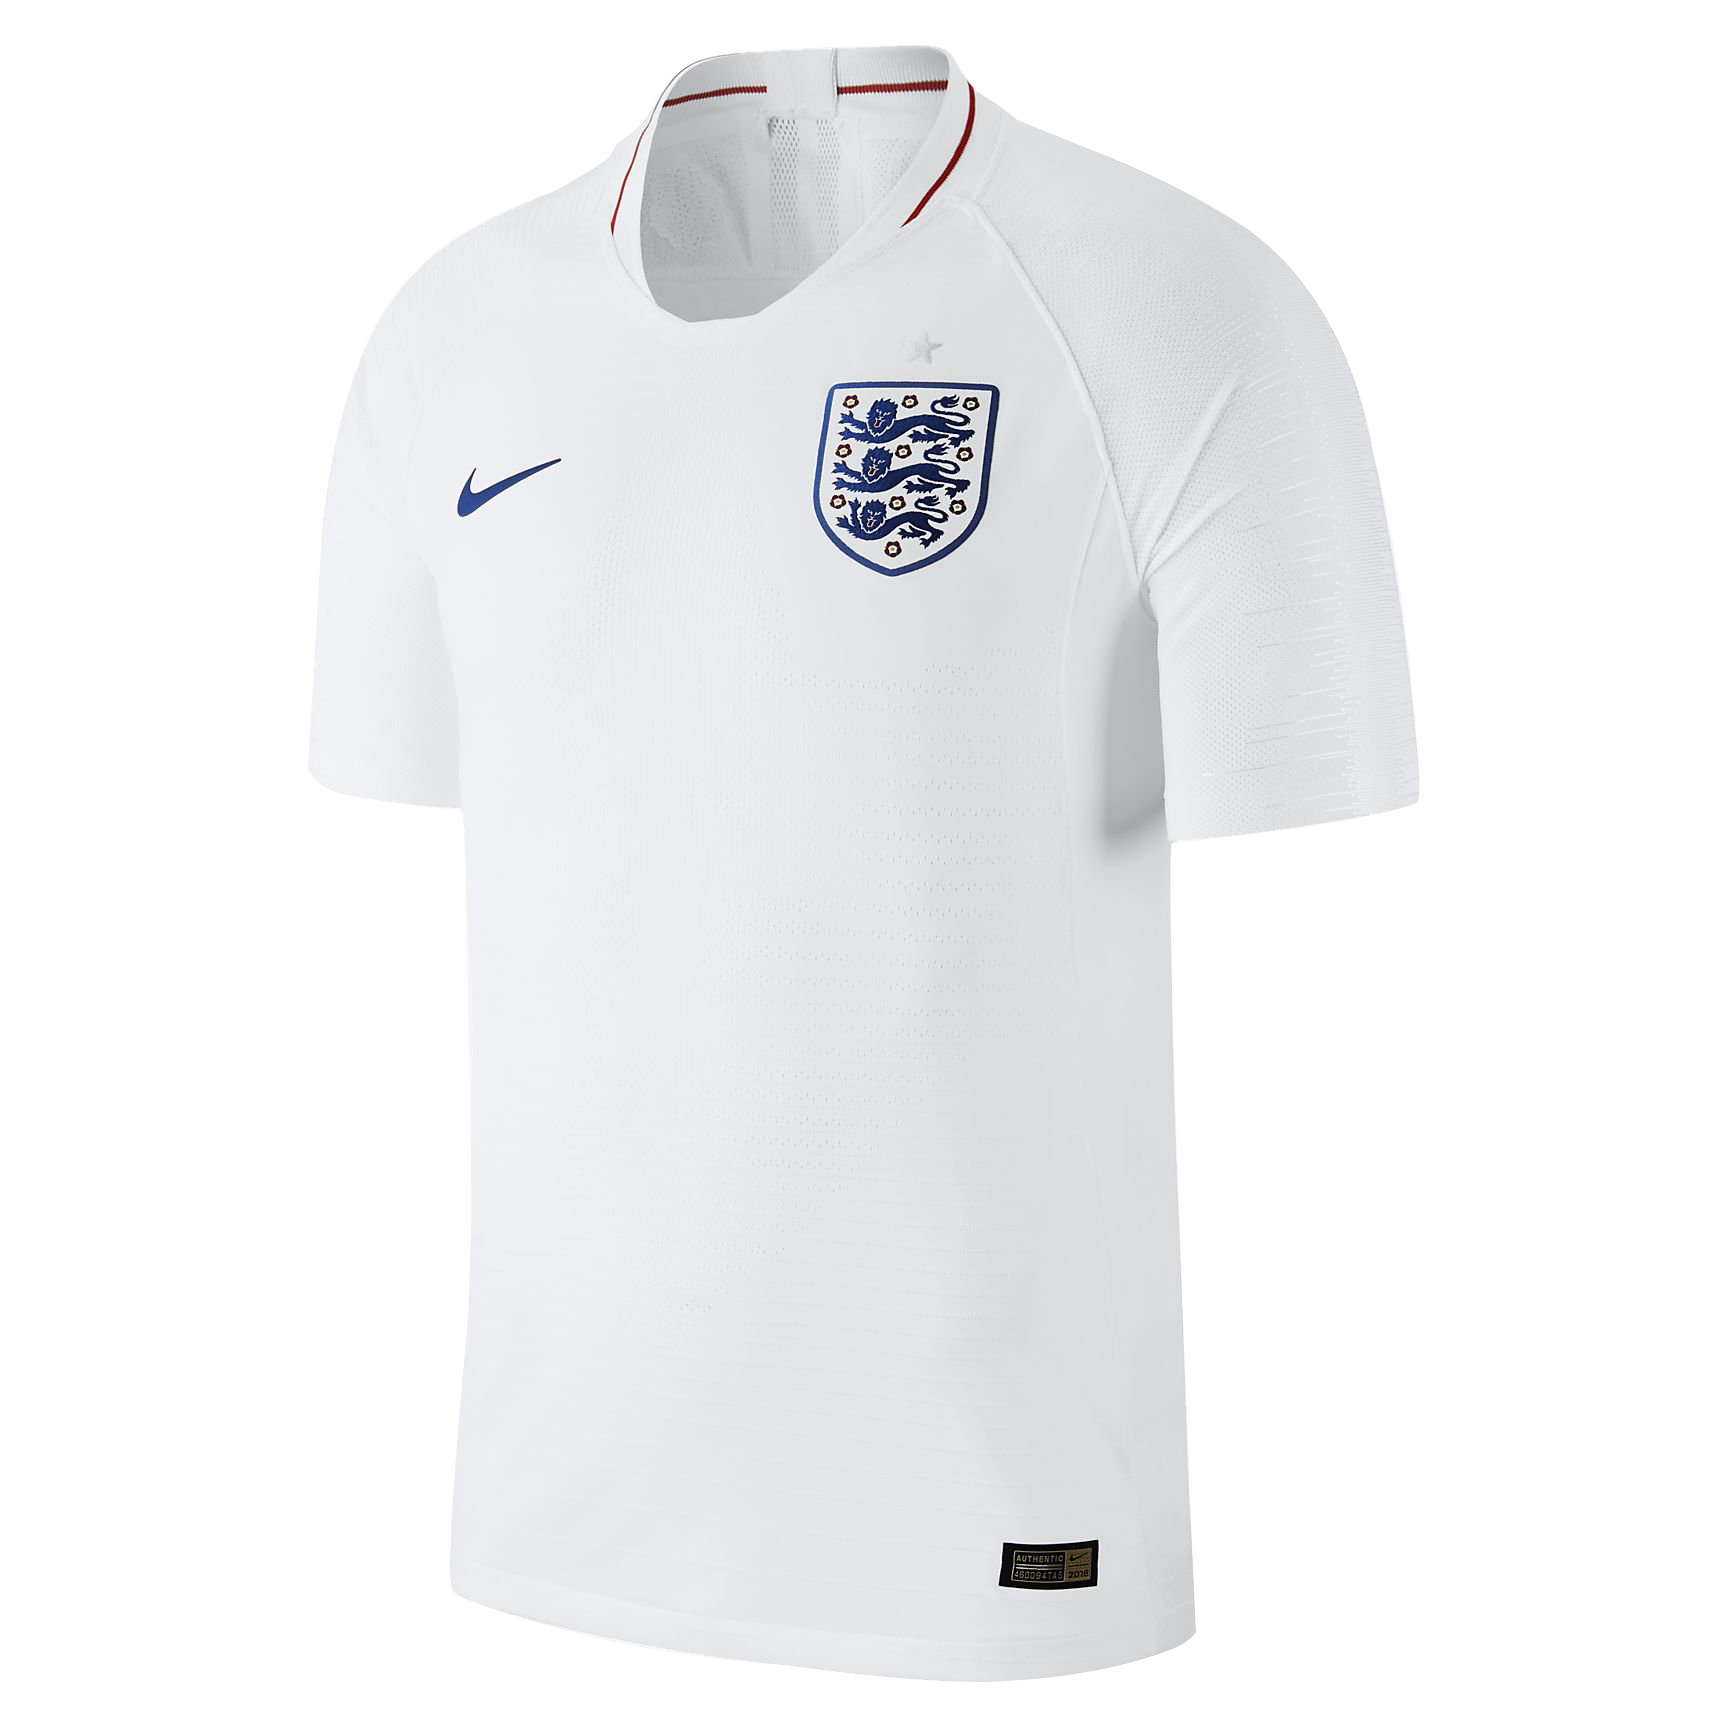 England Sport Gear,England Soccer Uniforms,England Soccer Jerseys